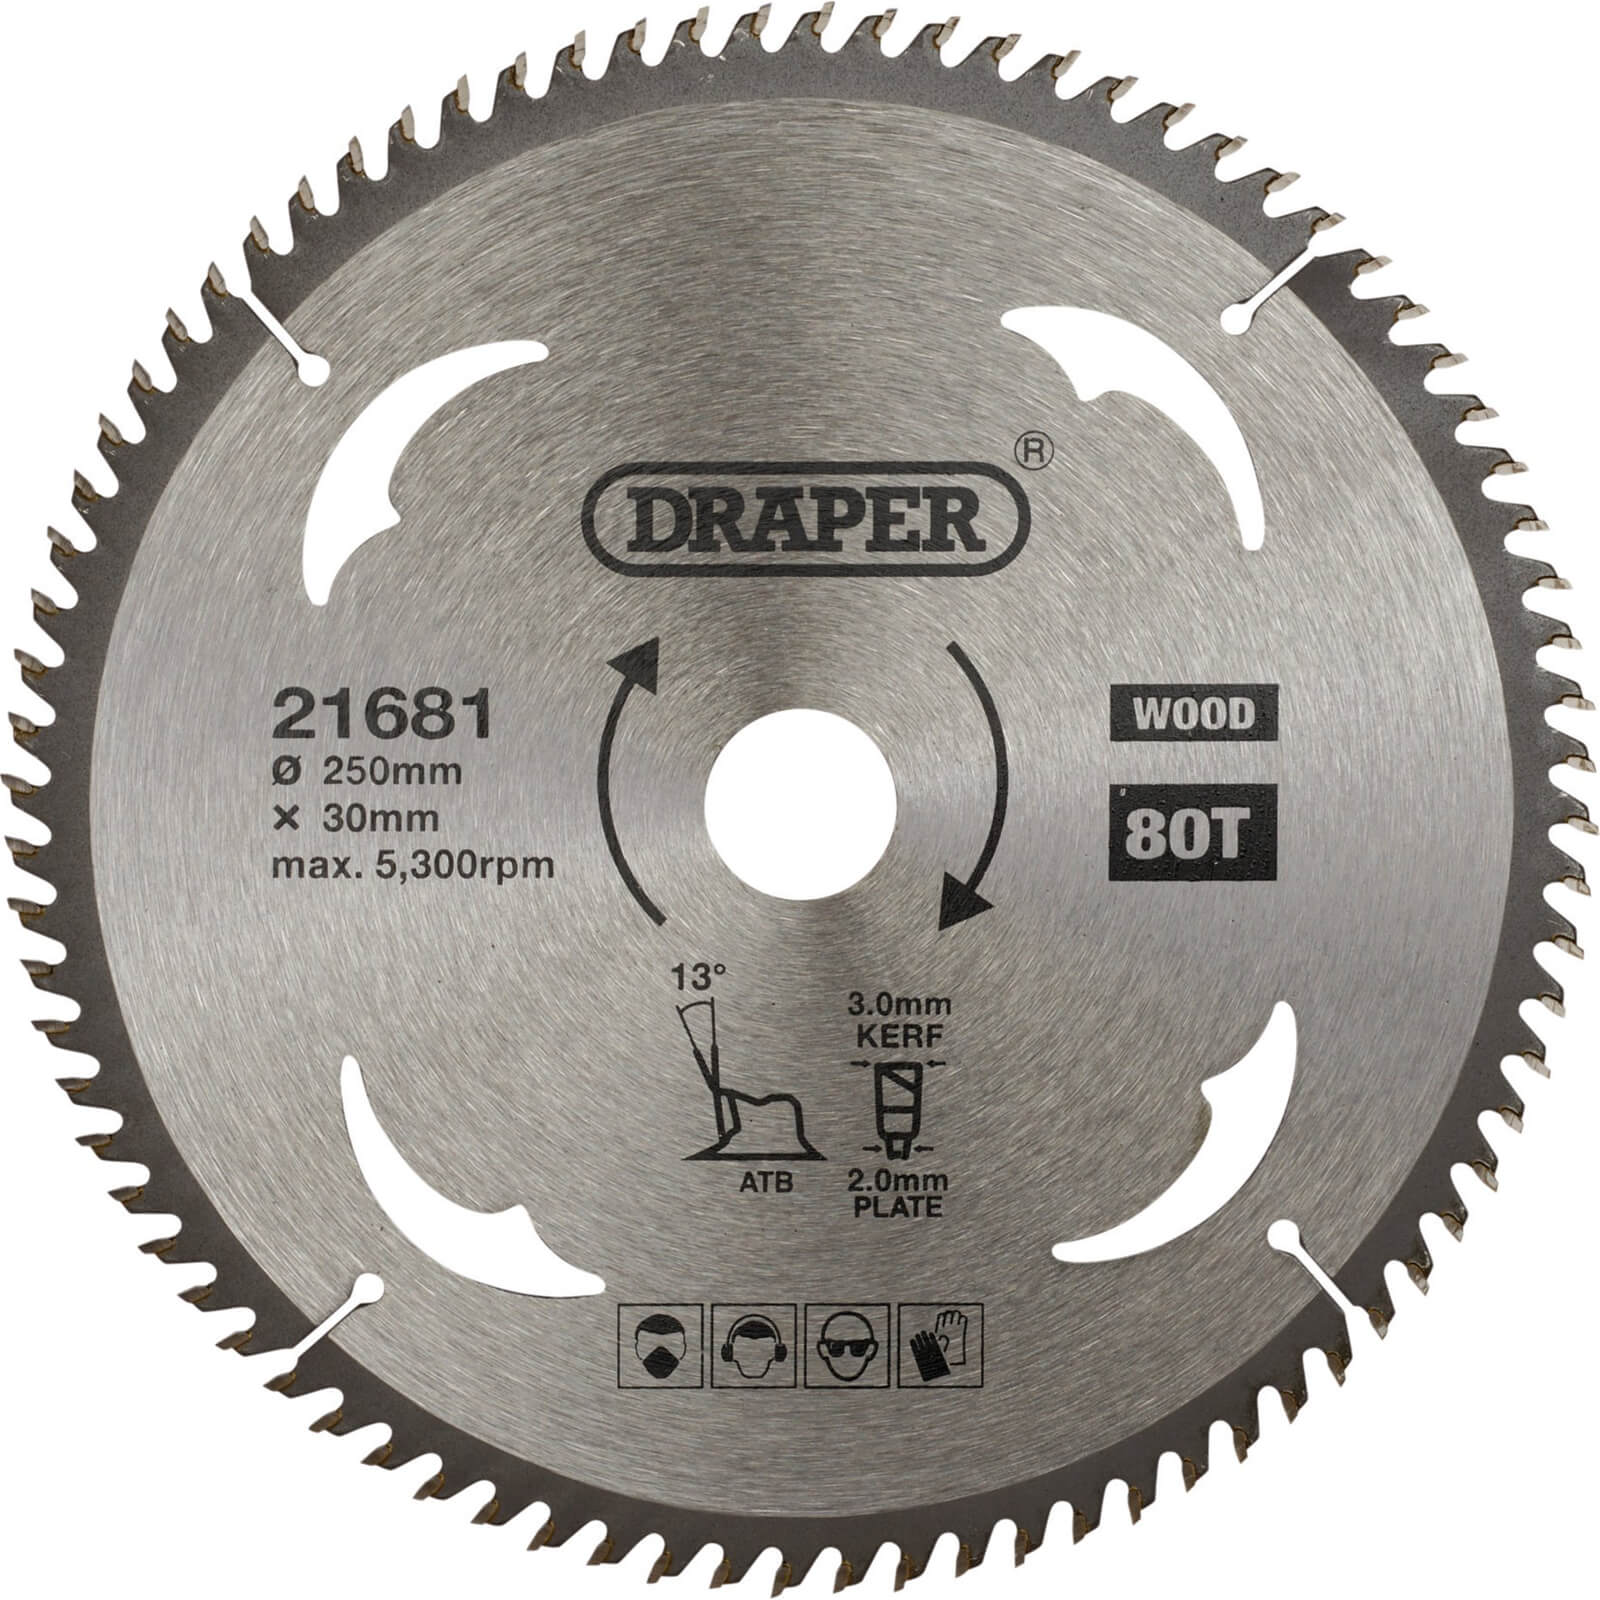 Image of Draper TCT Wood Cutting Circular Saw Blade 250mm 80T 30mm